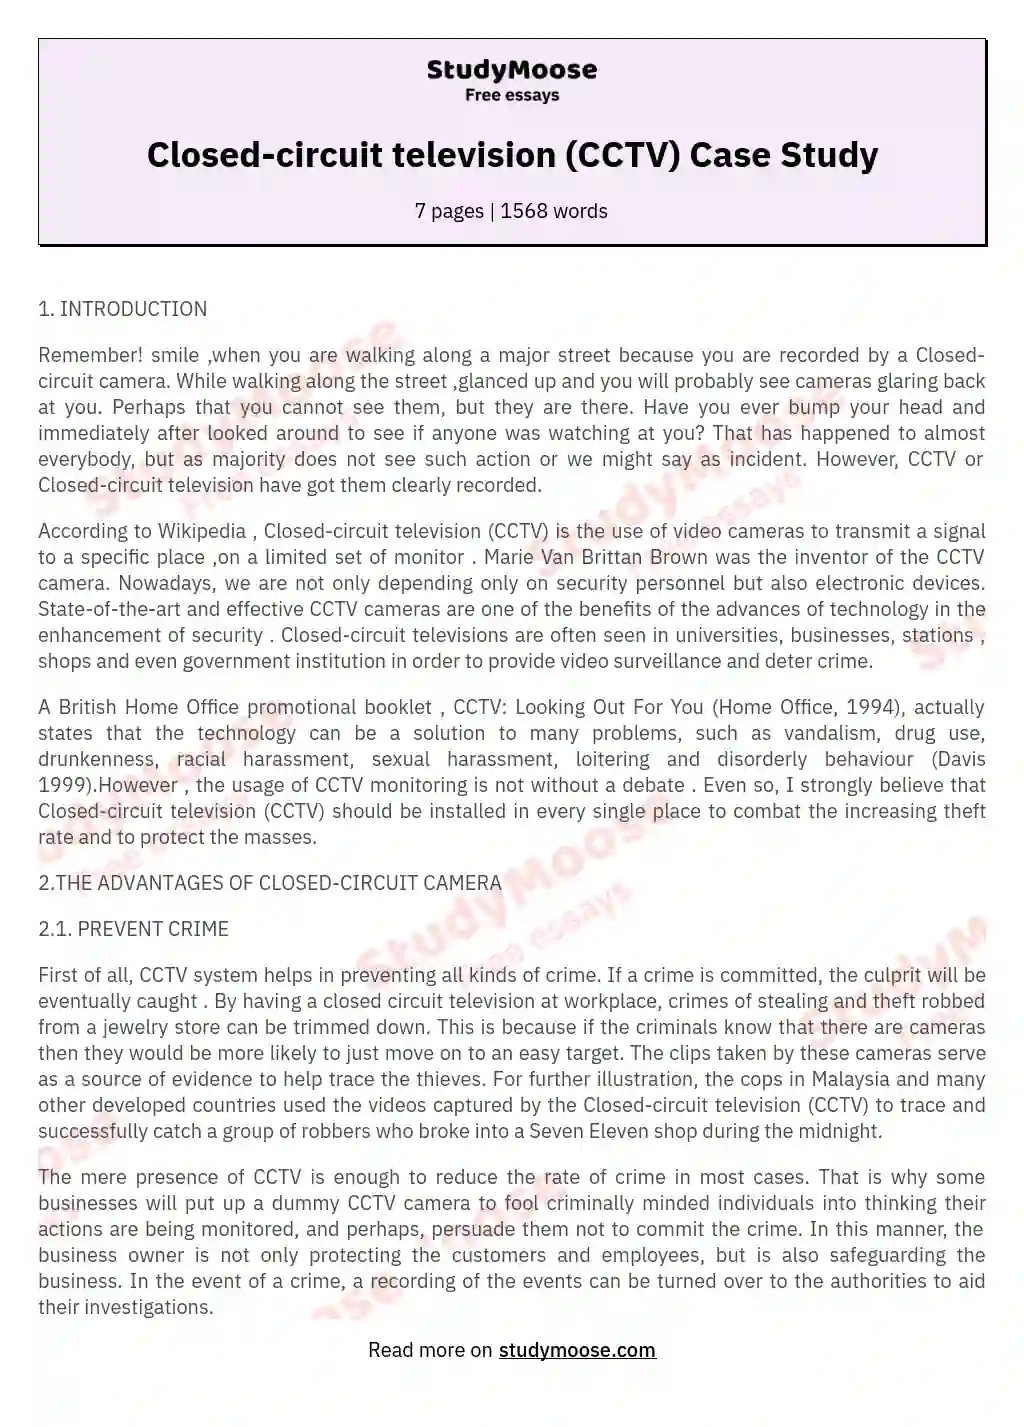 Closed-circuit television (CCTV) Case Study essay